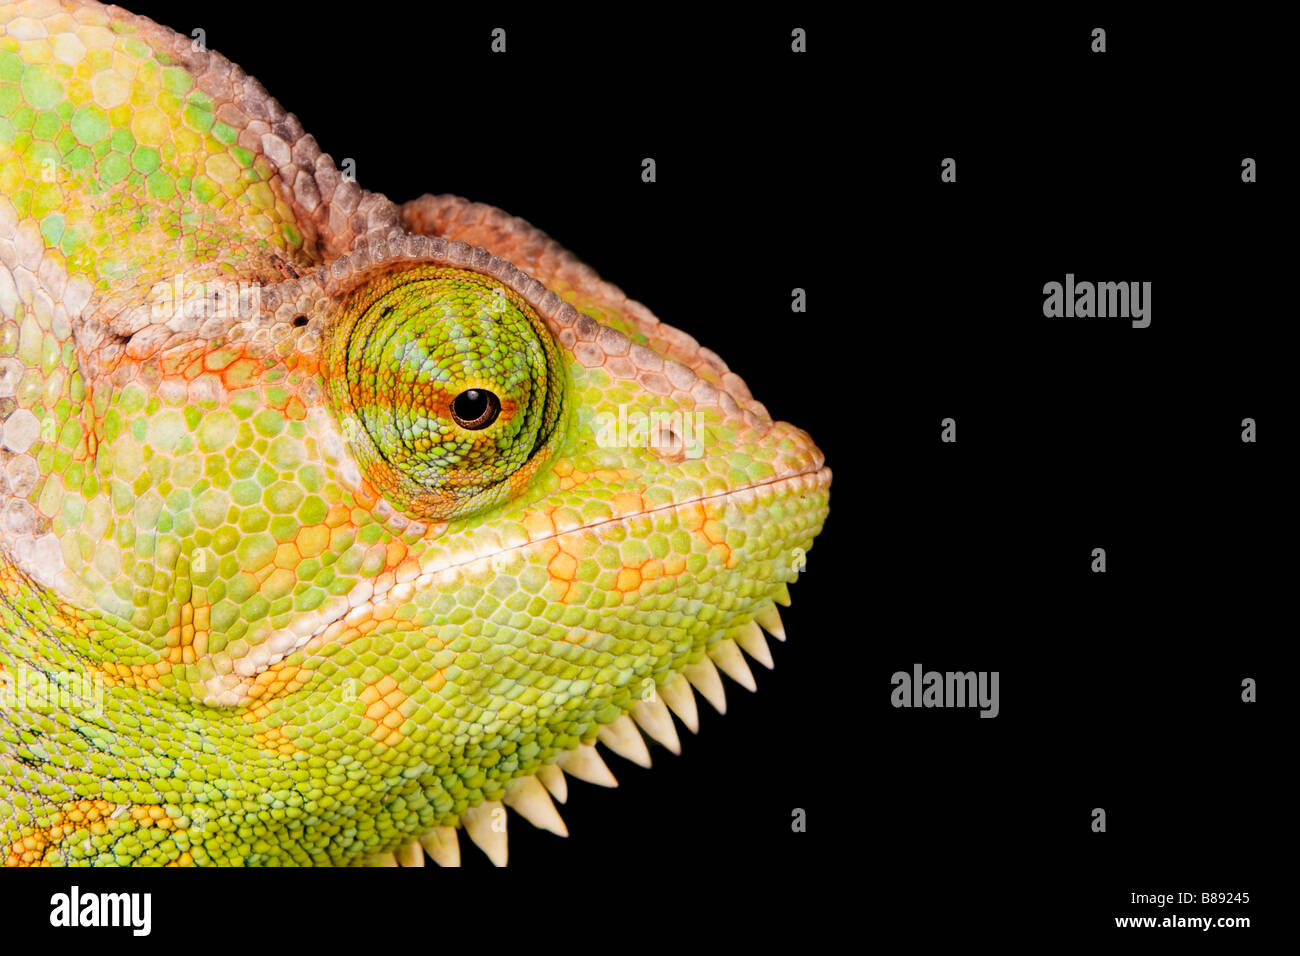 Head and facial features of a Veiled Chameleon, Chamaeleo calyptratus Stock Photo